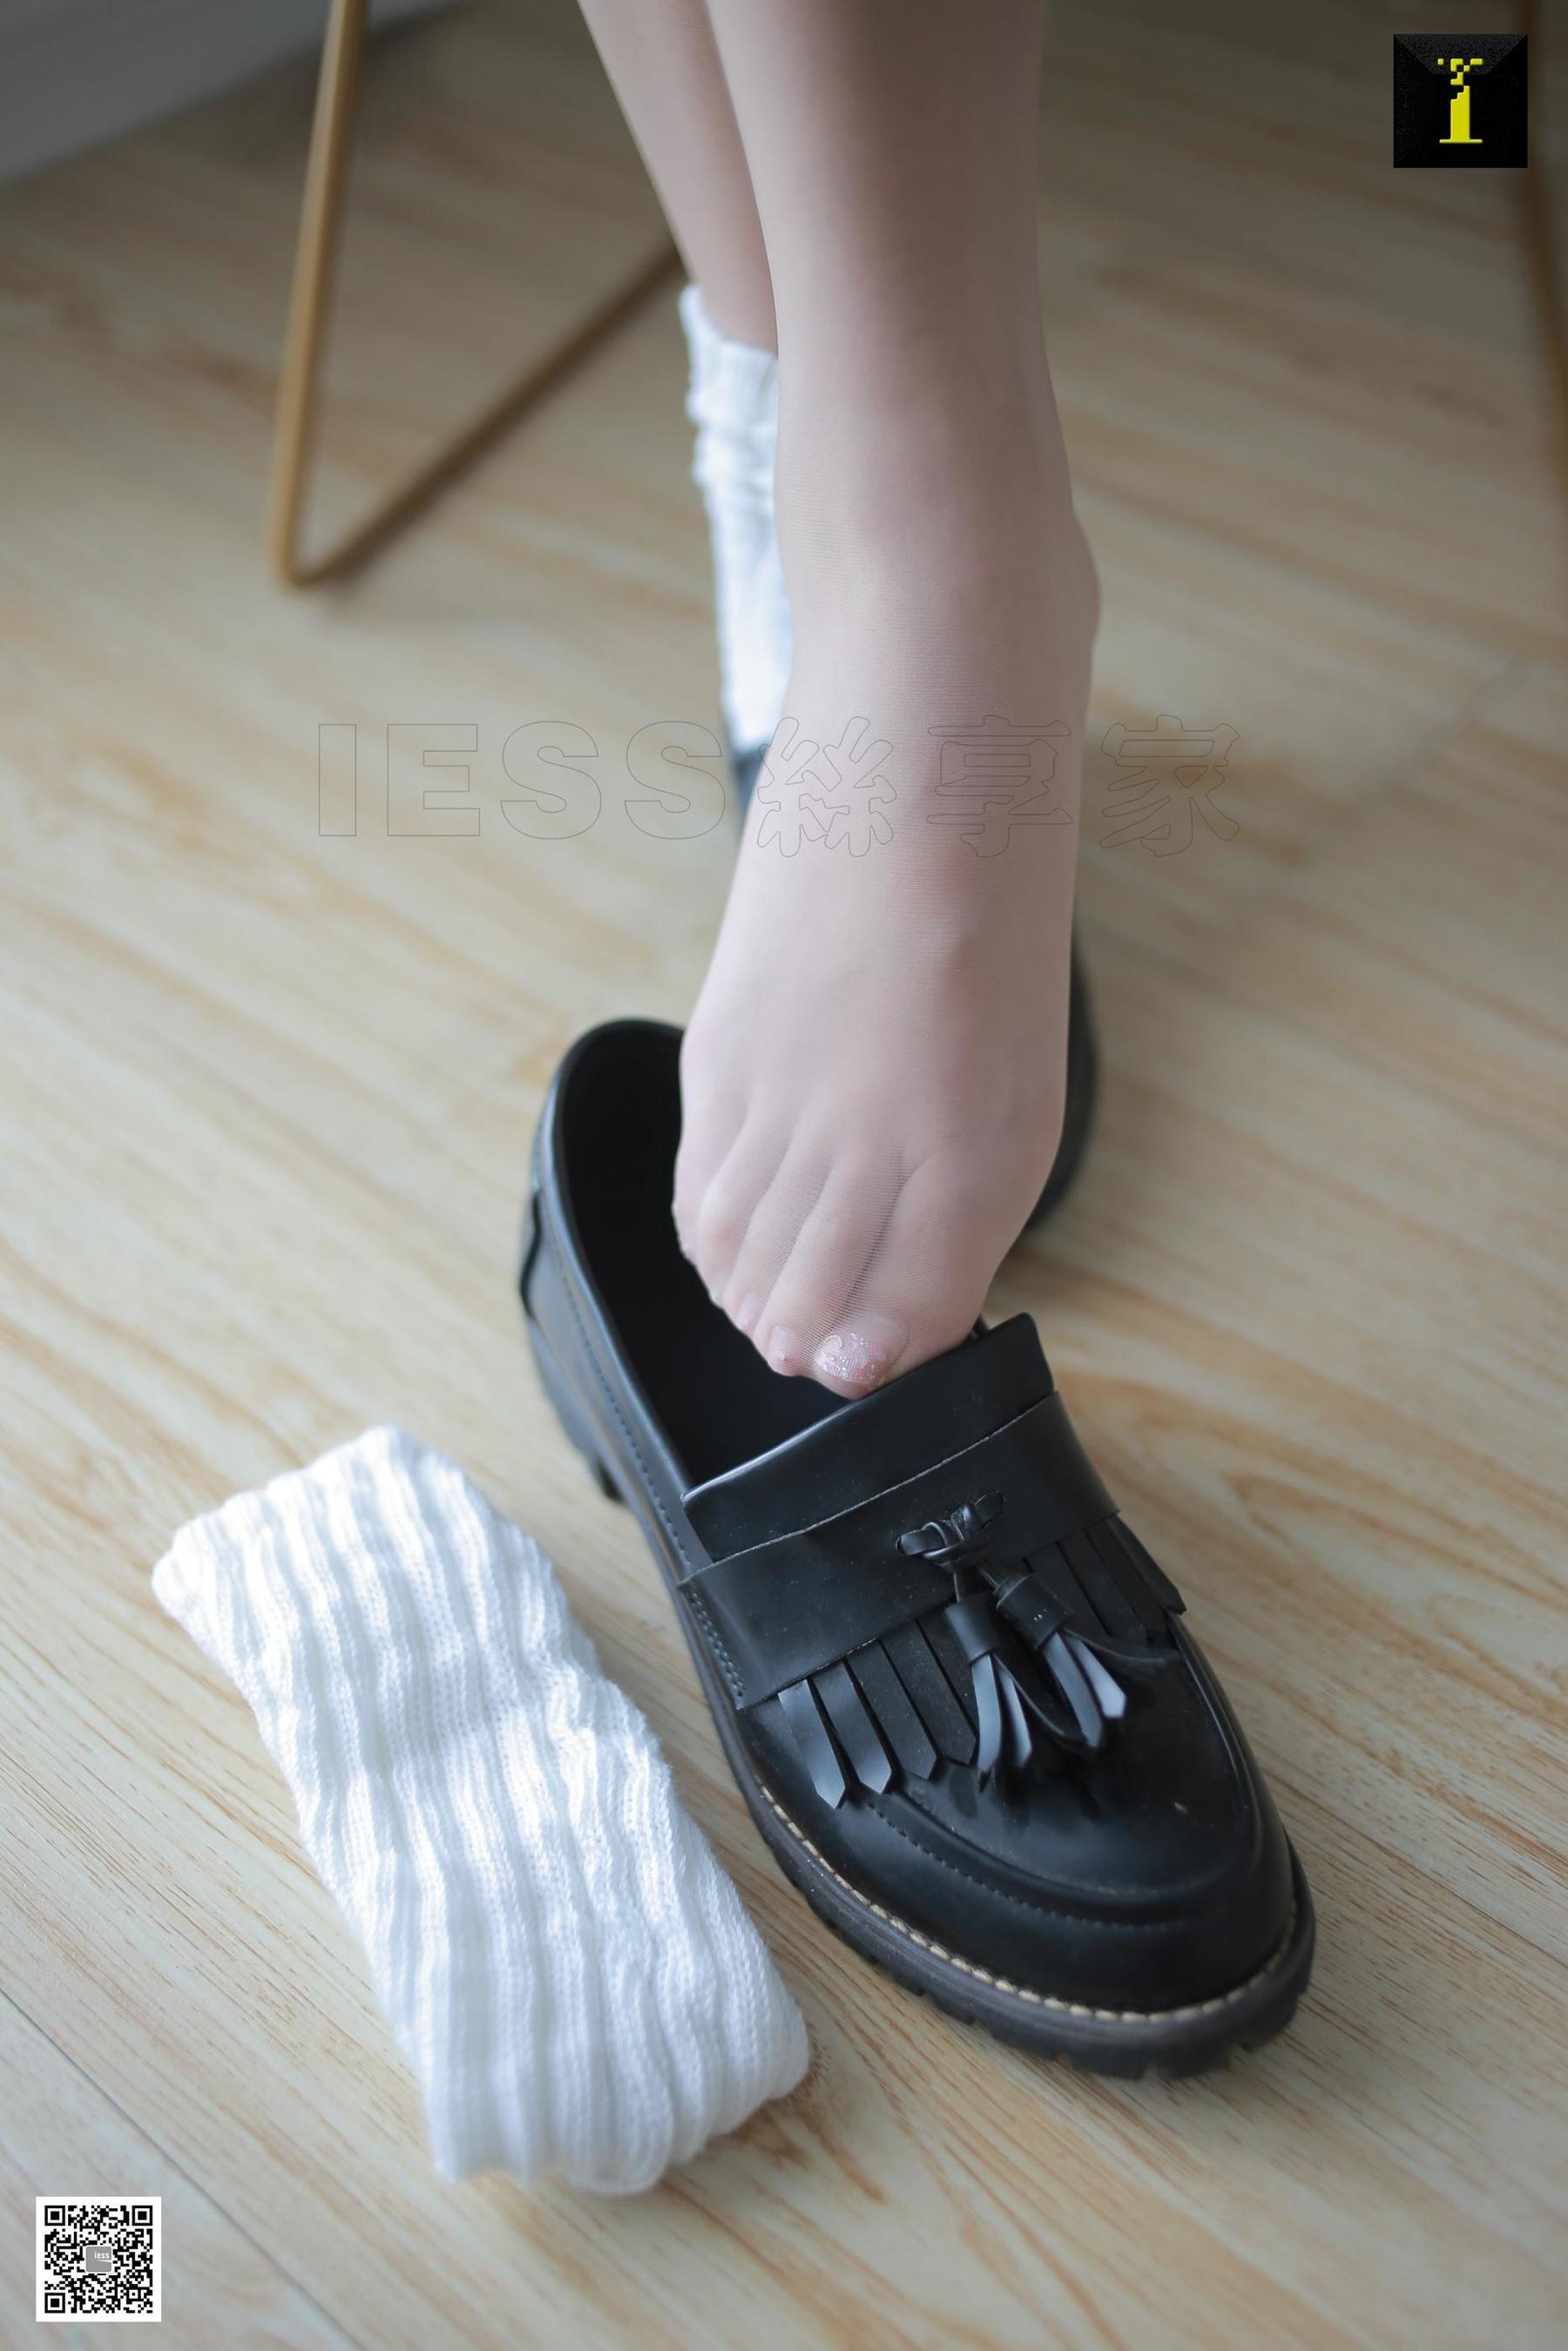 Model small shirt “small shirts to taste JK cotton socks” [IESS inexpensive] beautiful legs foot photo set